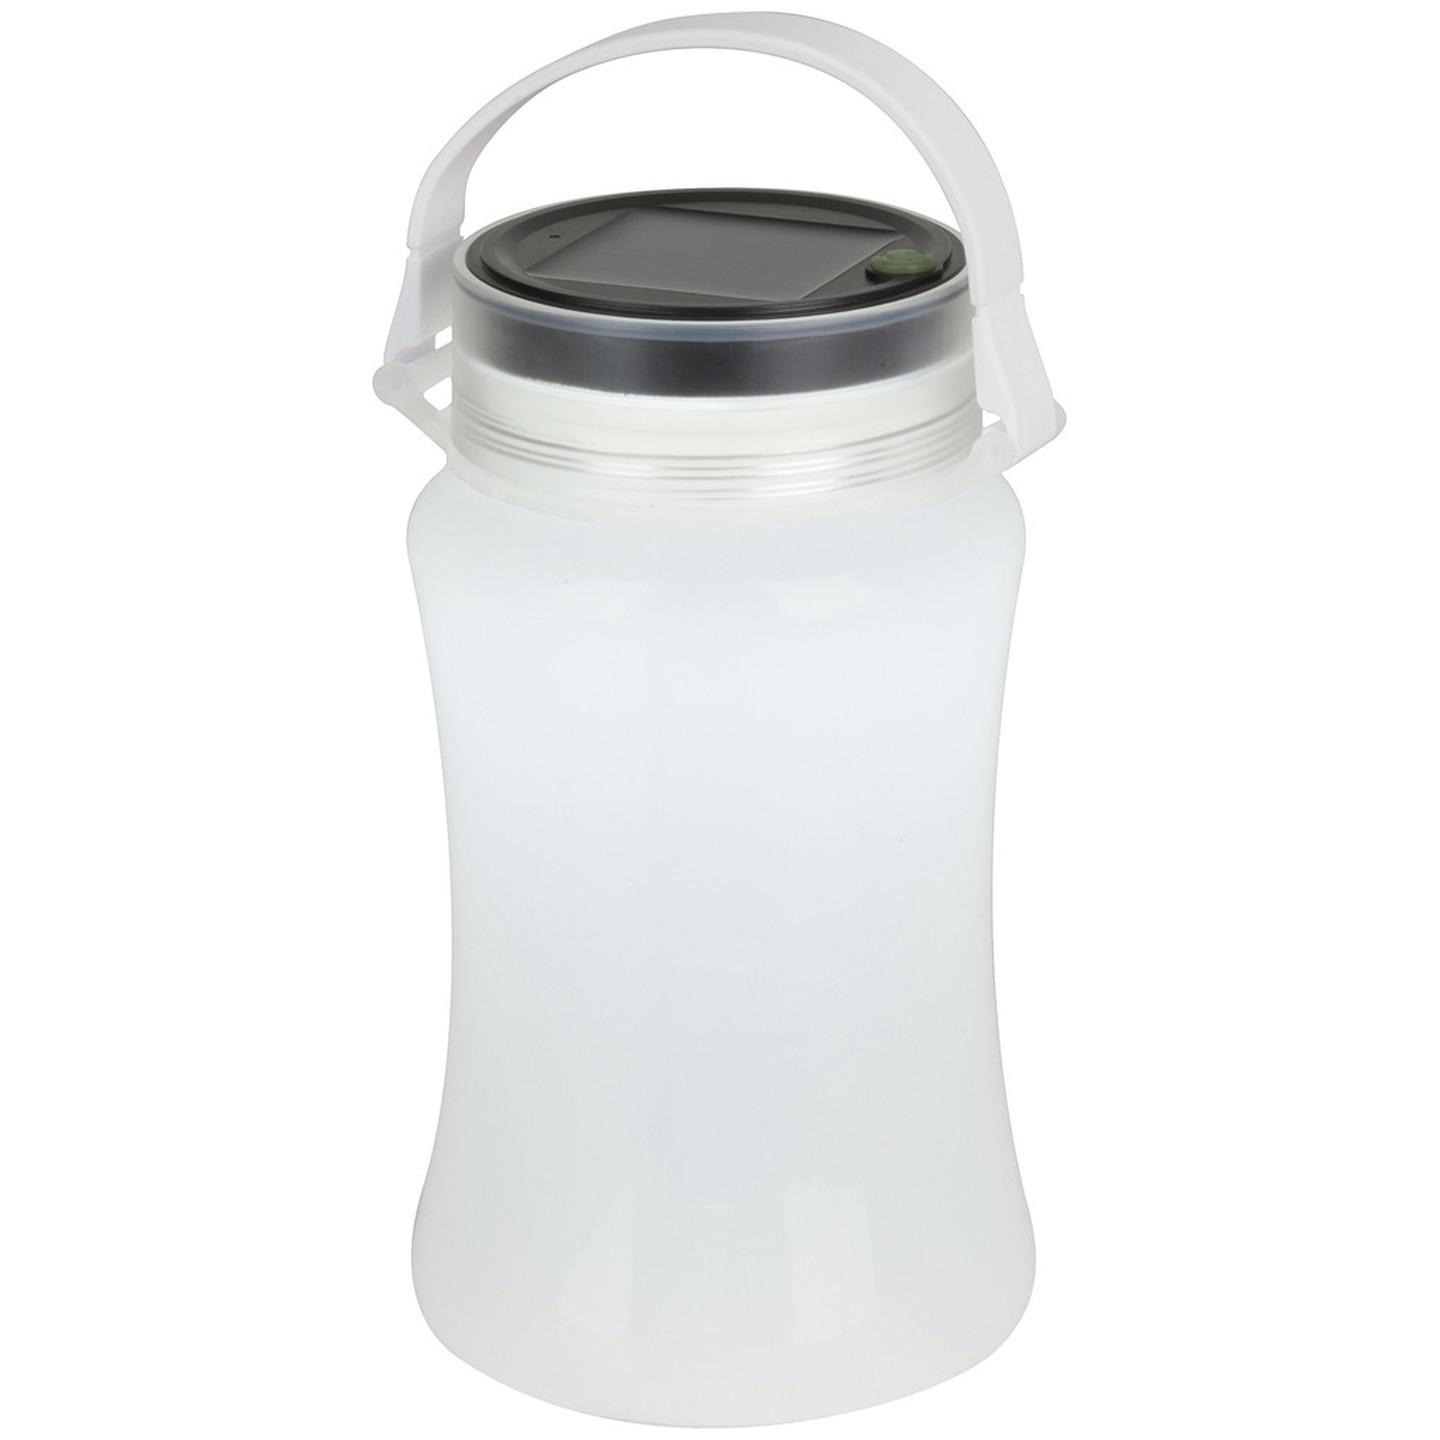 White Waterproof Solar LED Lantern.